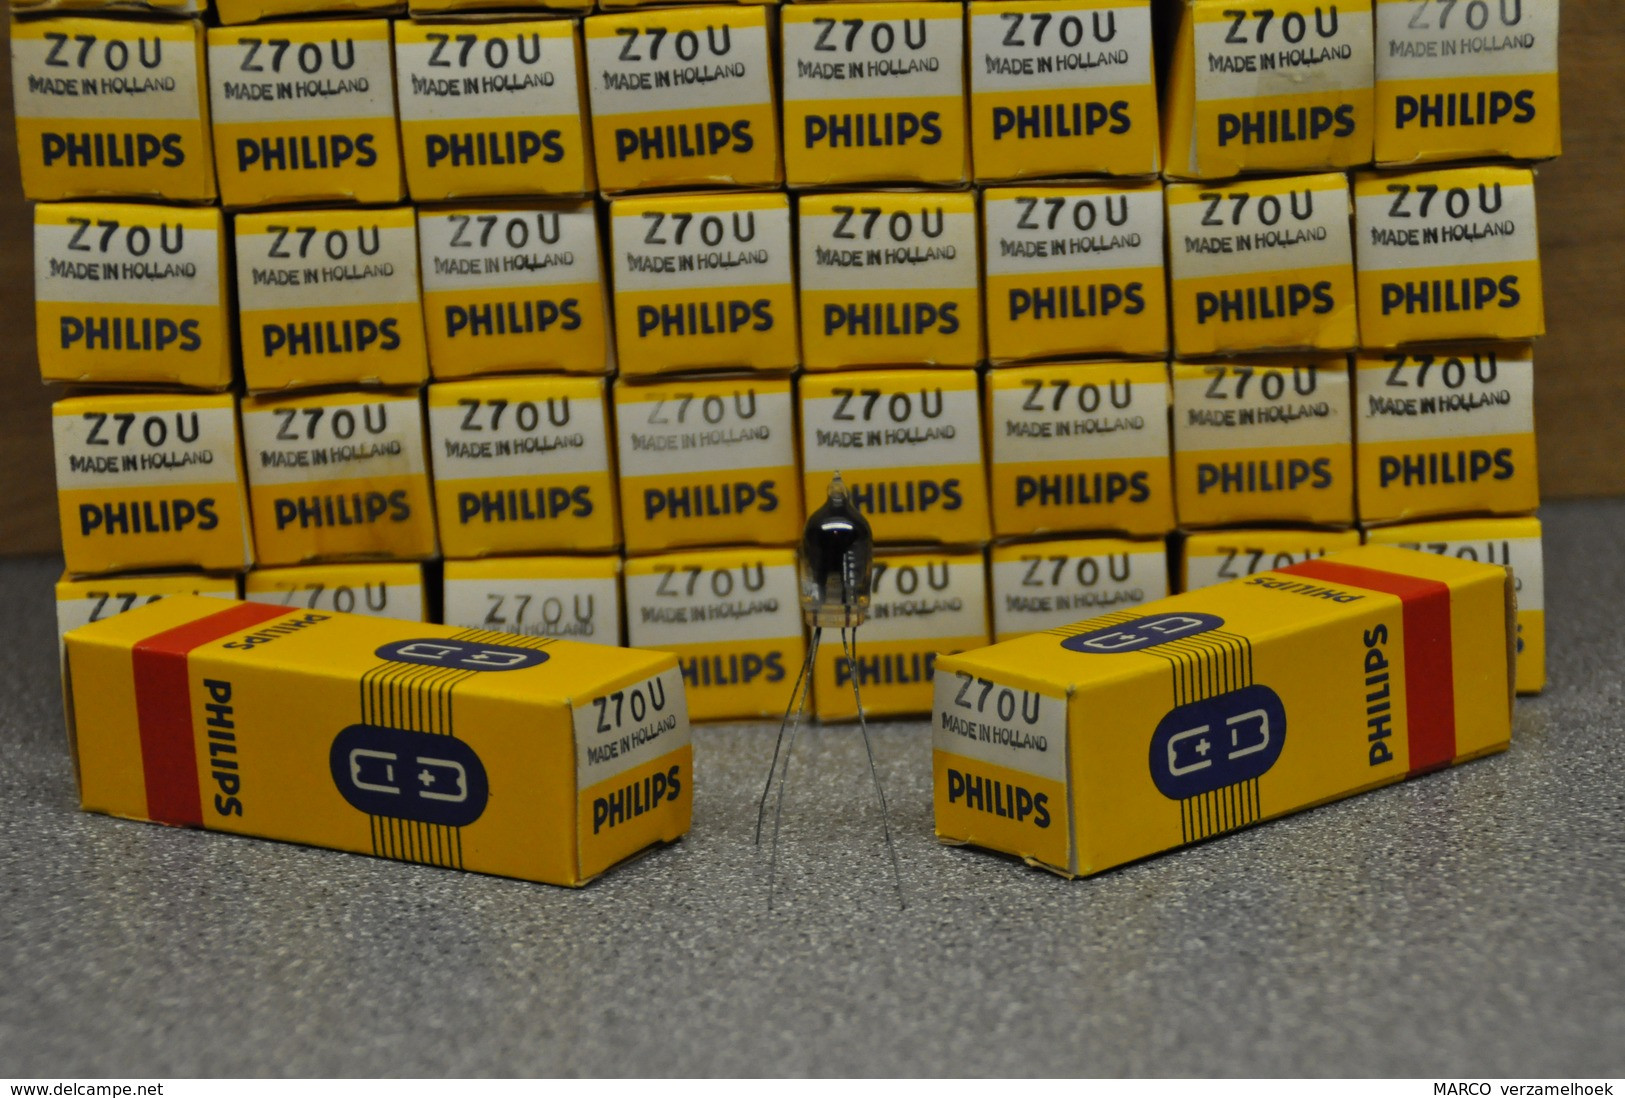 Philips Buis-röhre-tube Z70U (7710 - GR43) Thyratron Tube New (jukebox) Neonbuisje Glimmröhre - Elektronenbuis